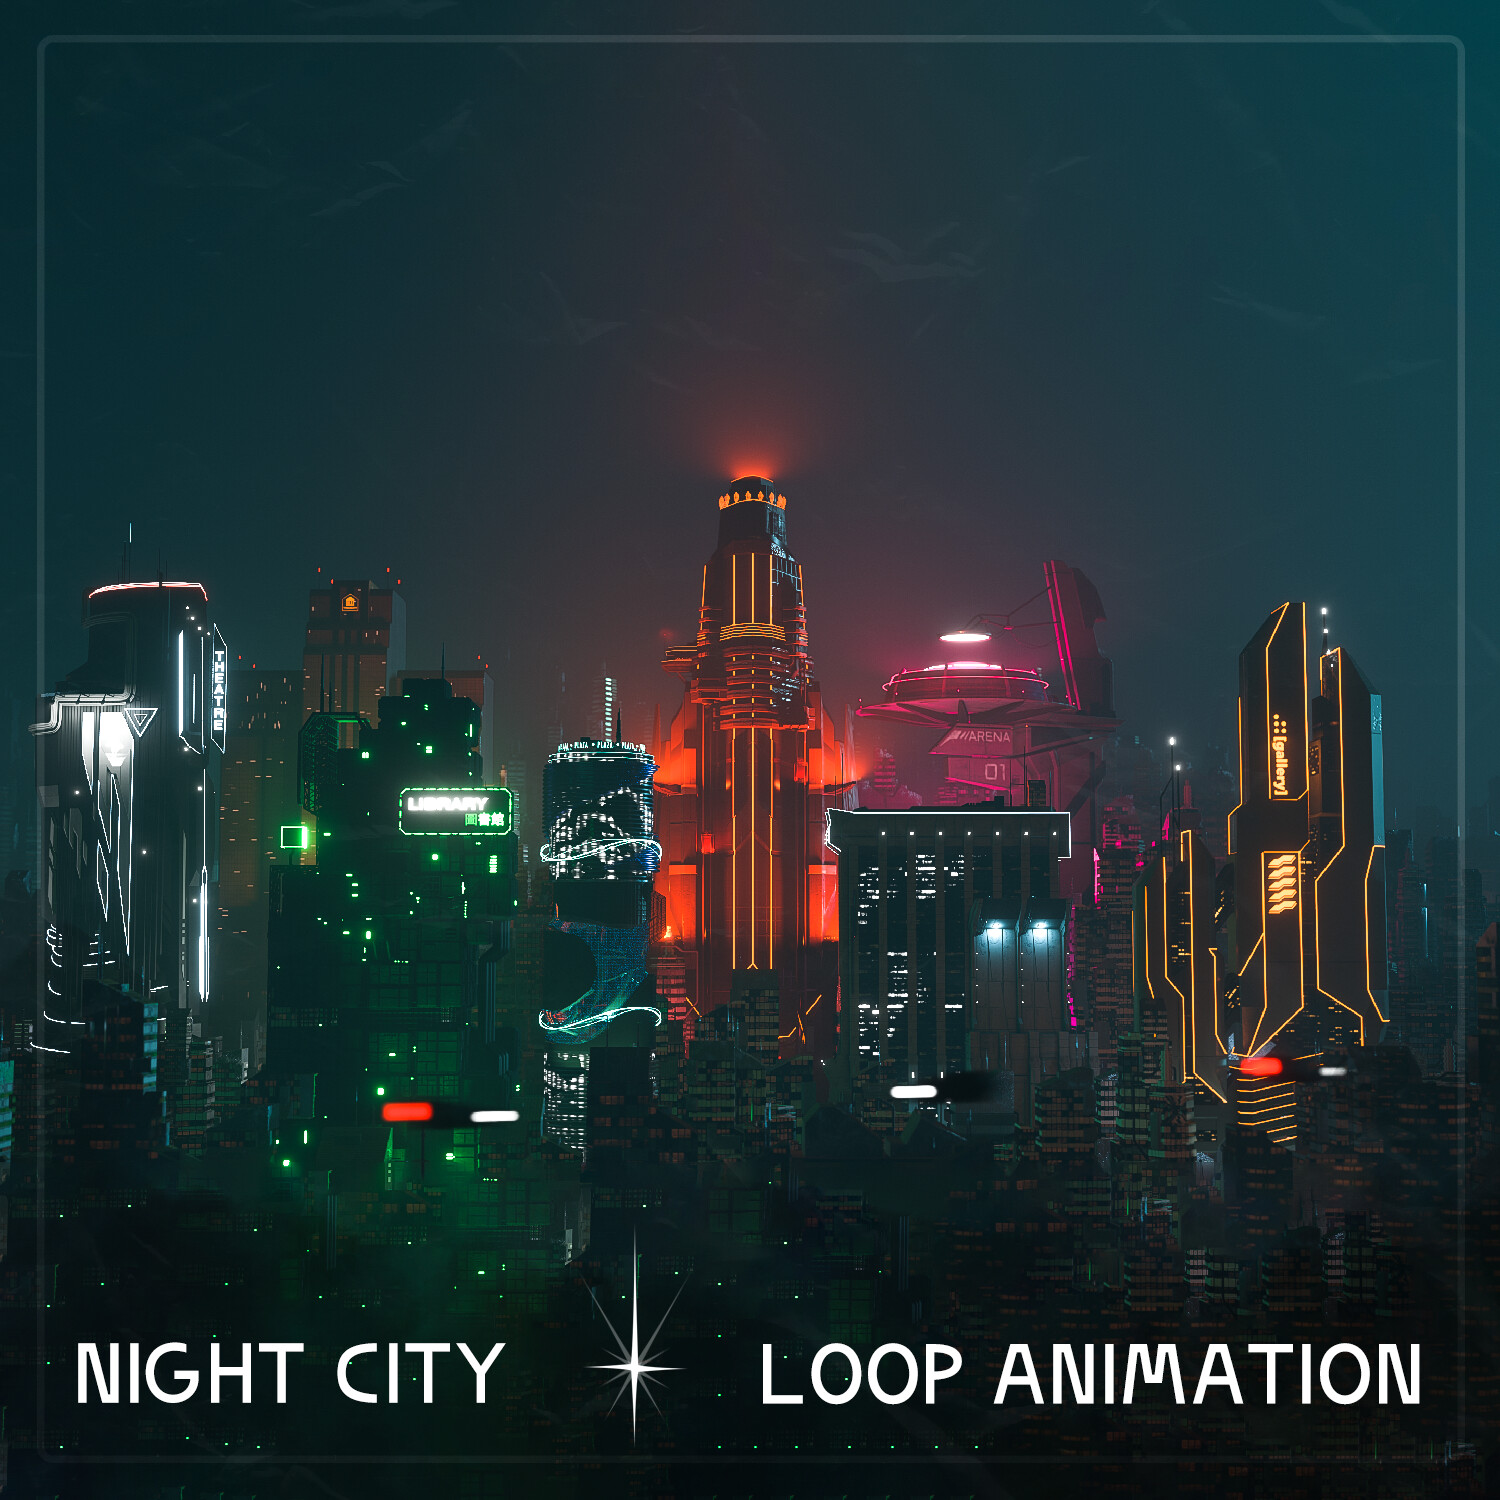 ArtStation - Cyberpunk animated loop